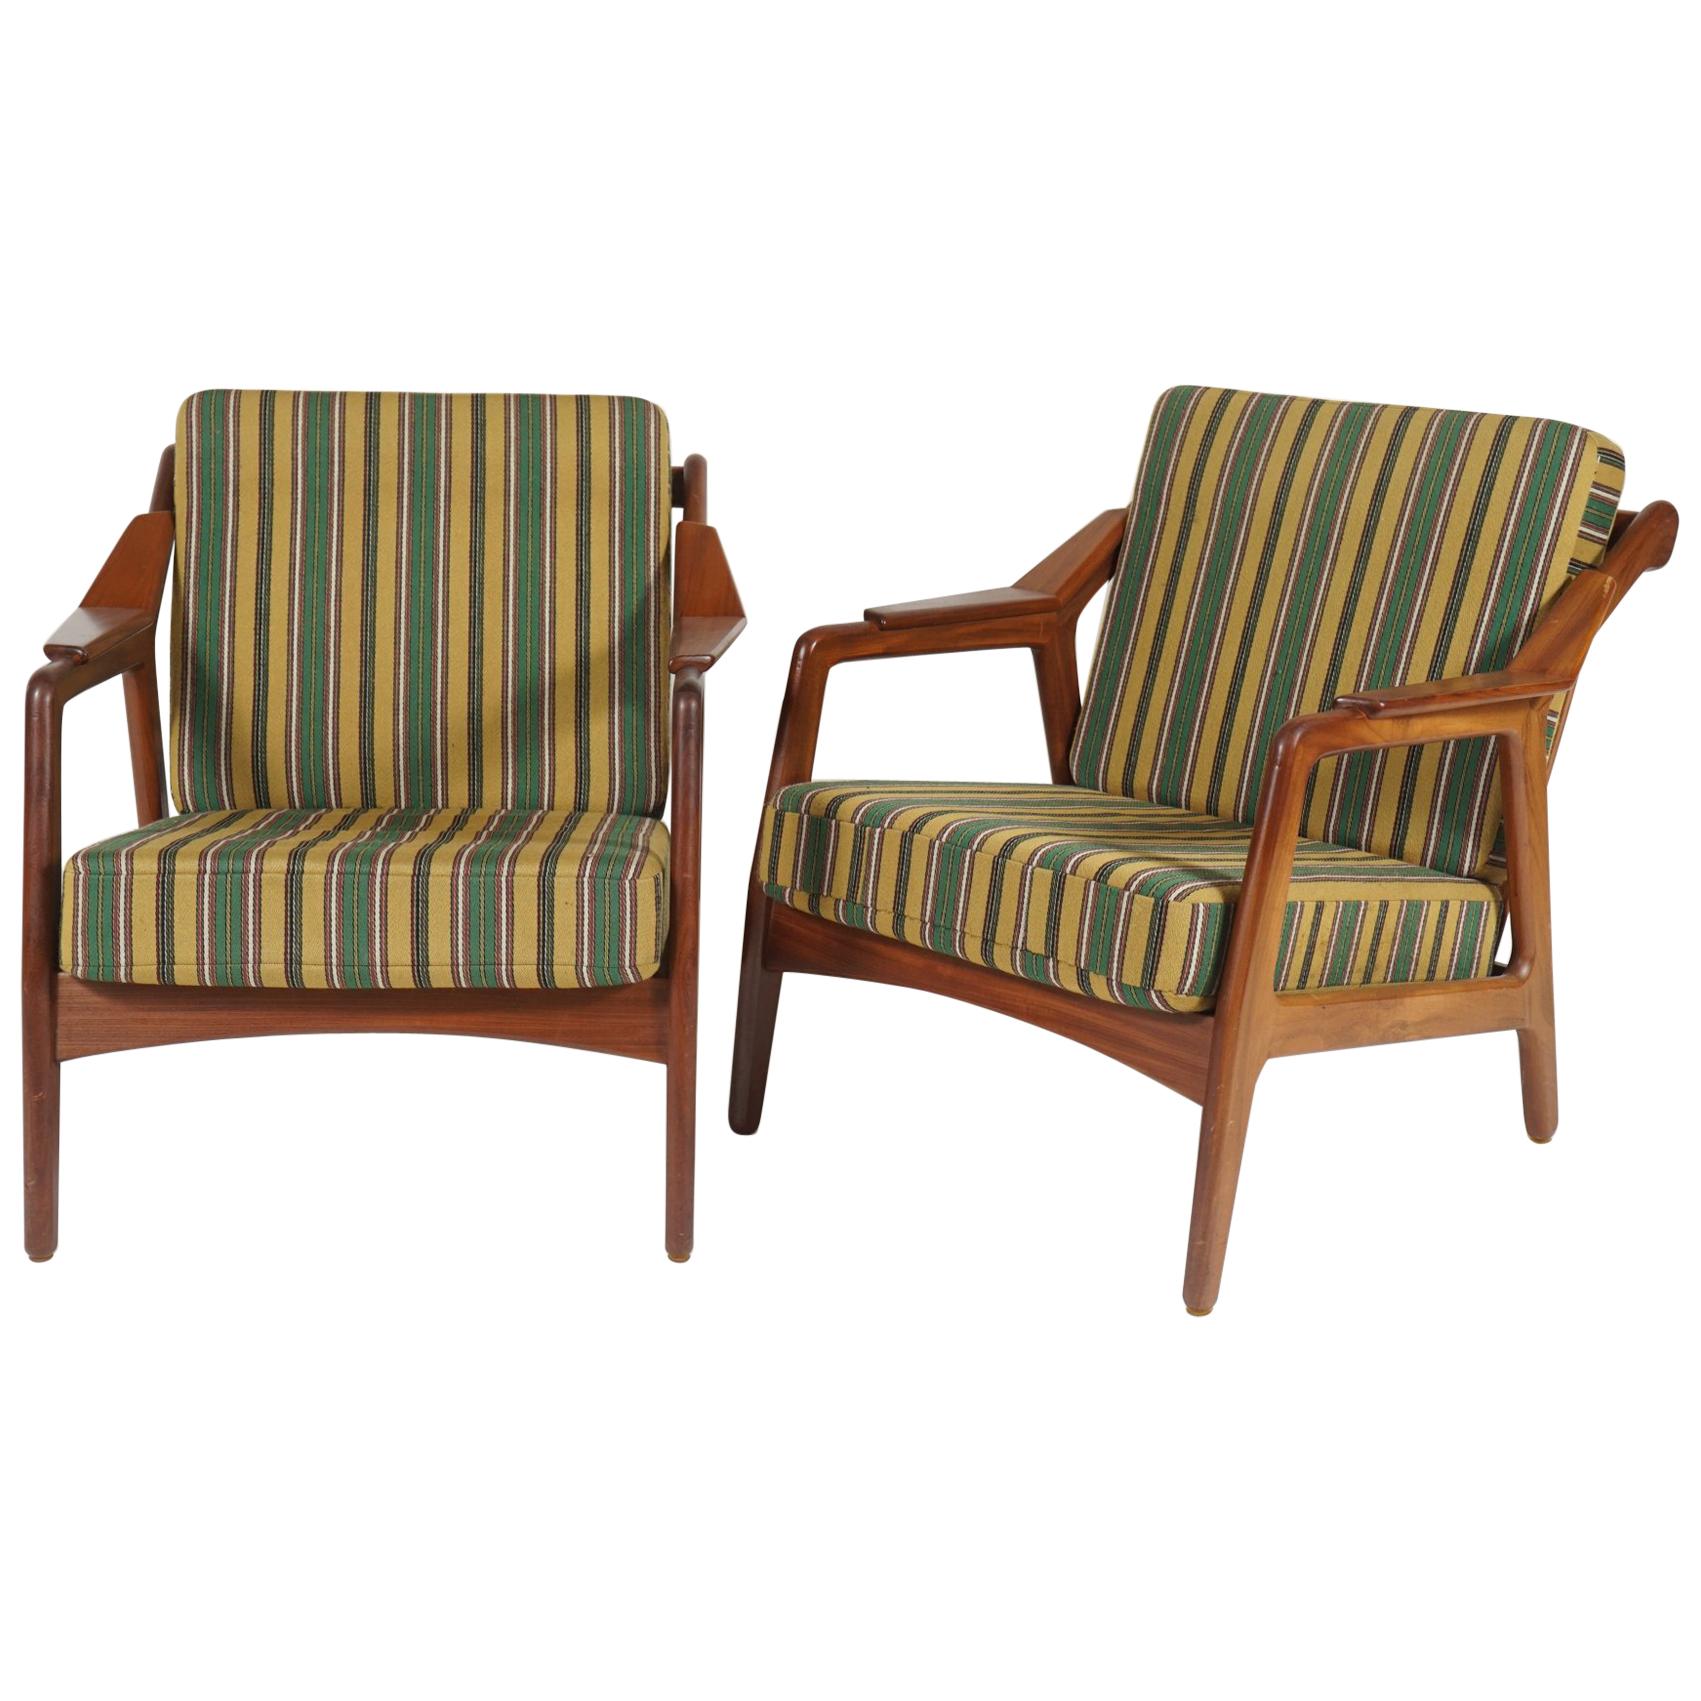 Pair of Danish Modern Chairs by H. Brockmann-Pedersen